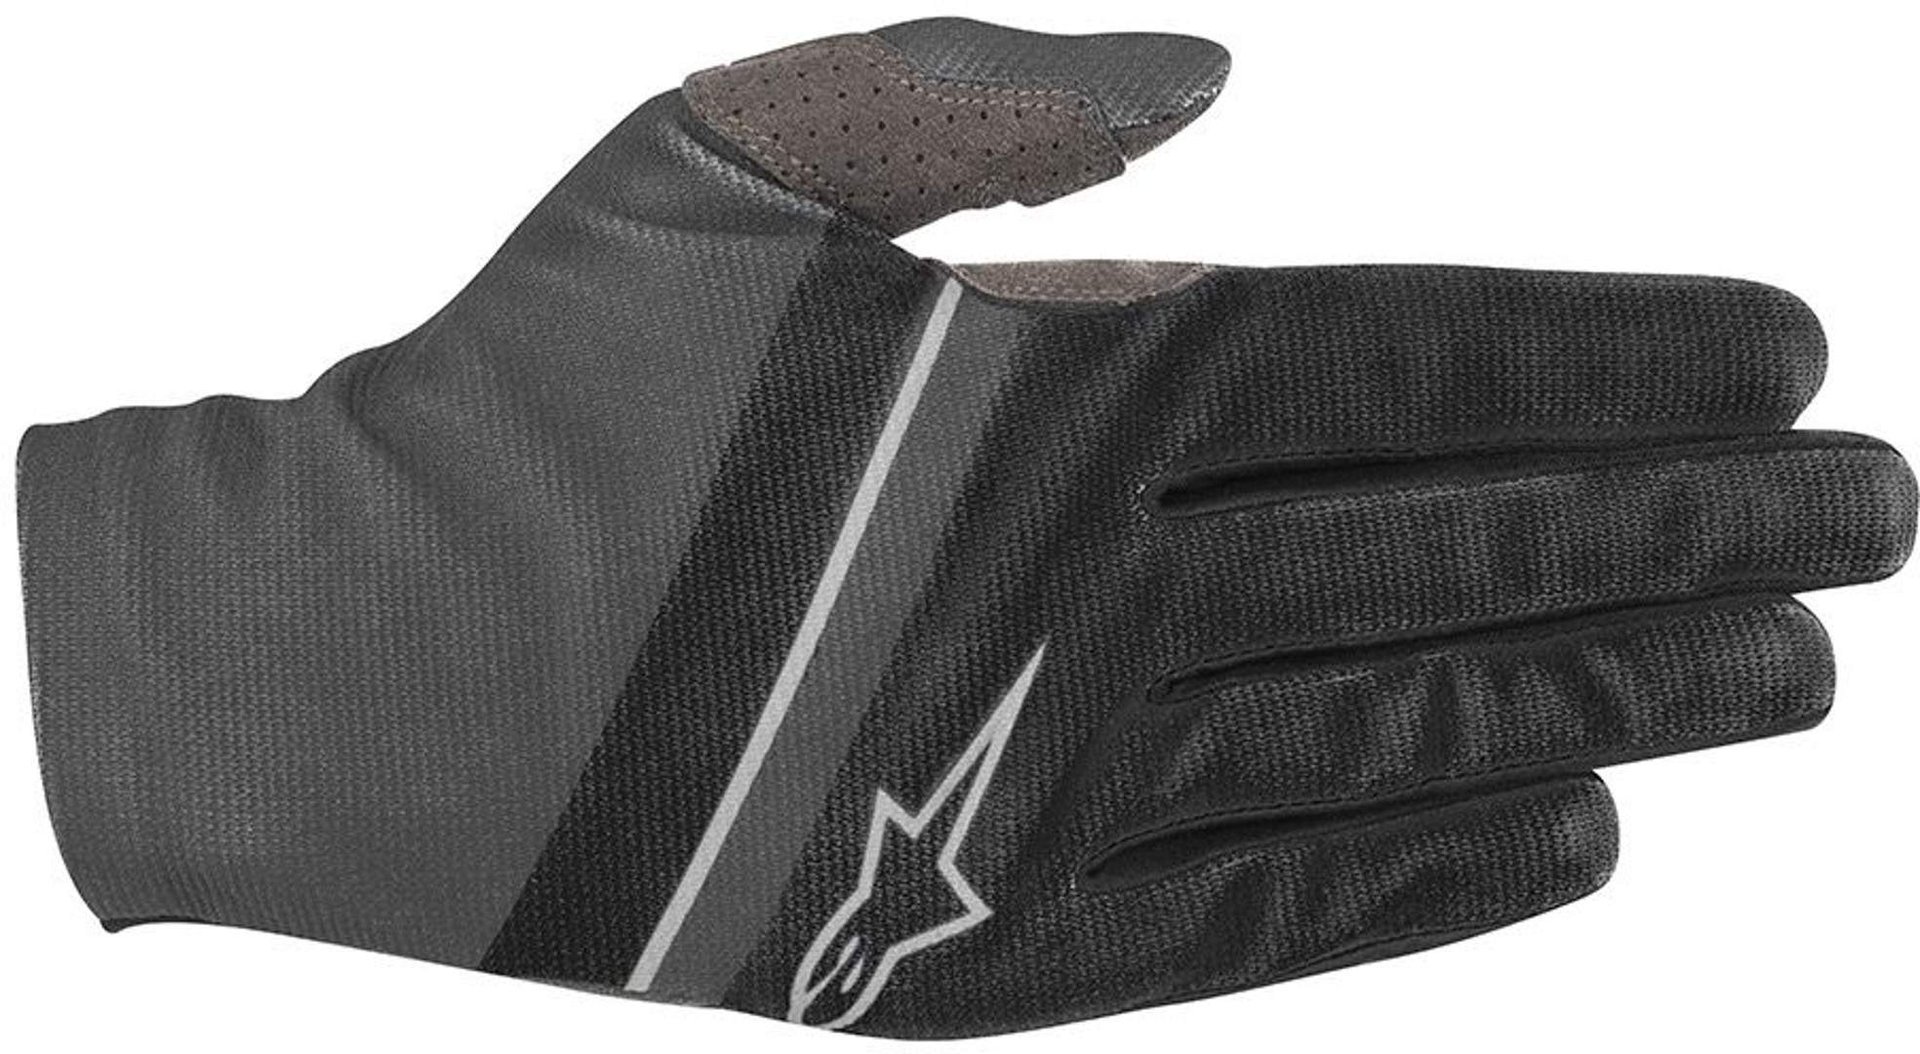 Alpinestars Aspen Plus Bicycle Gloves, black-grey, Size M, black-grey, Size M